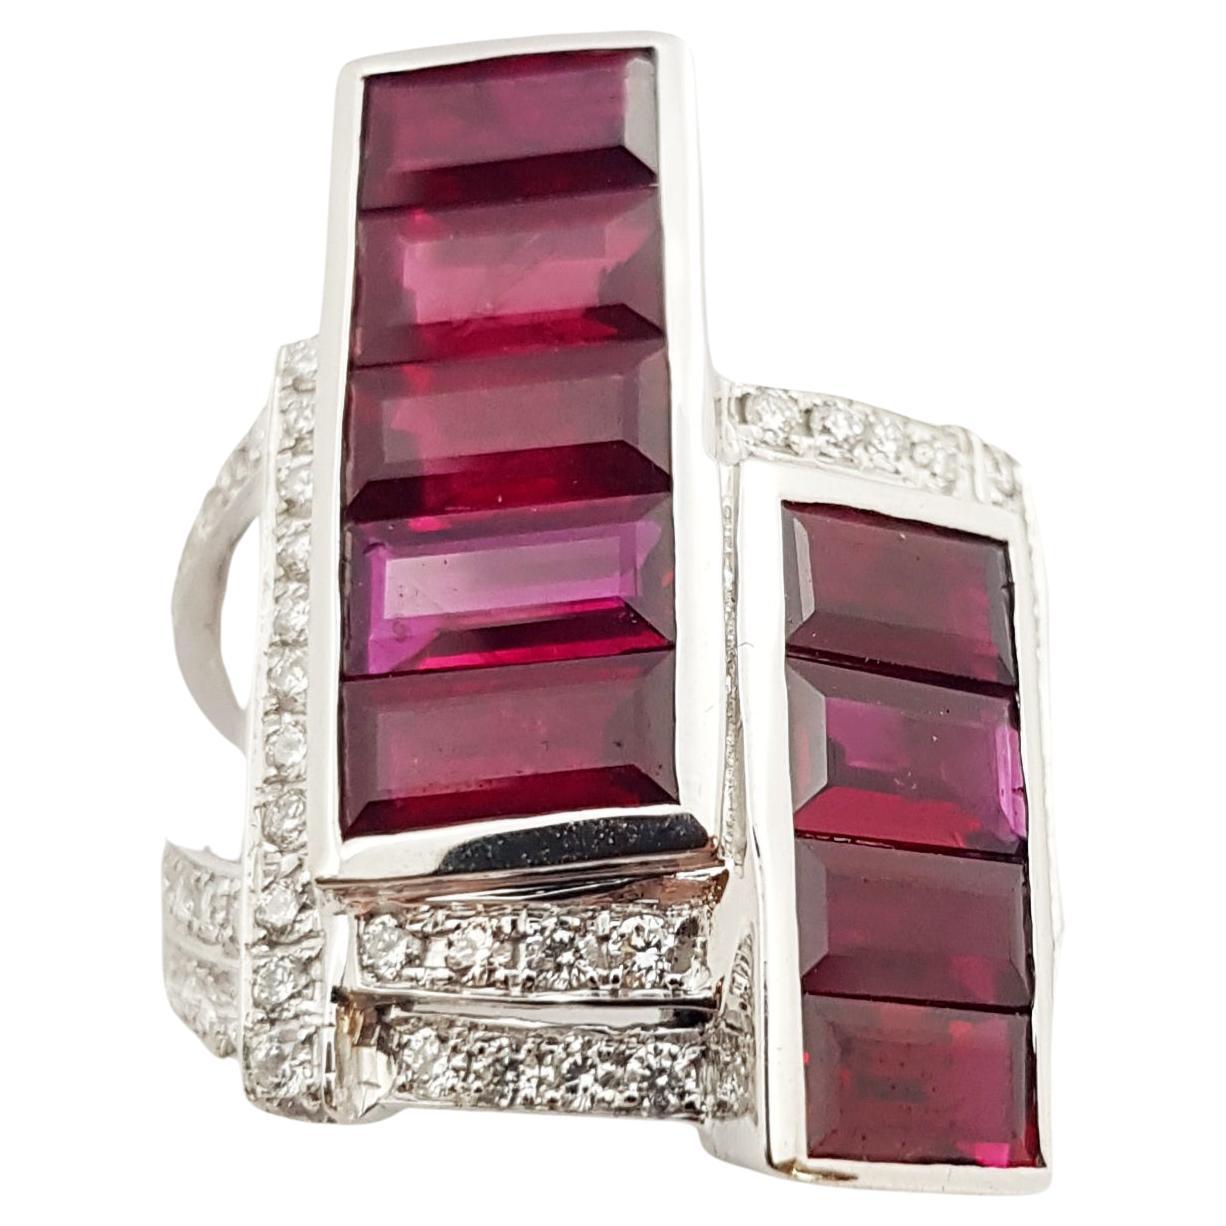 Ruby with Diamond Ring Set in 18 Karat White Gold Setting